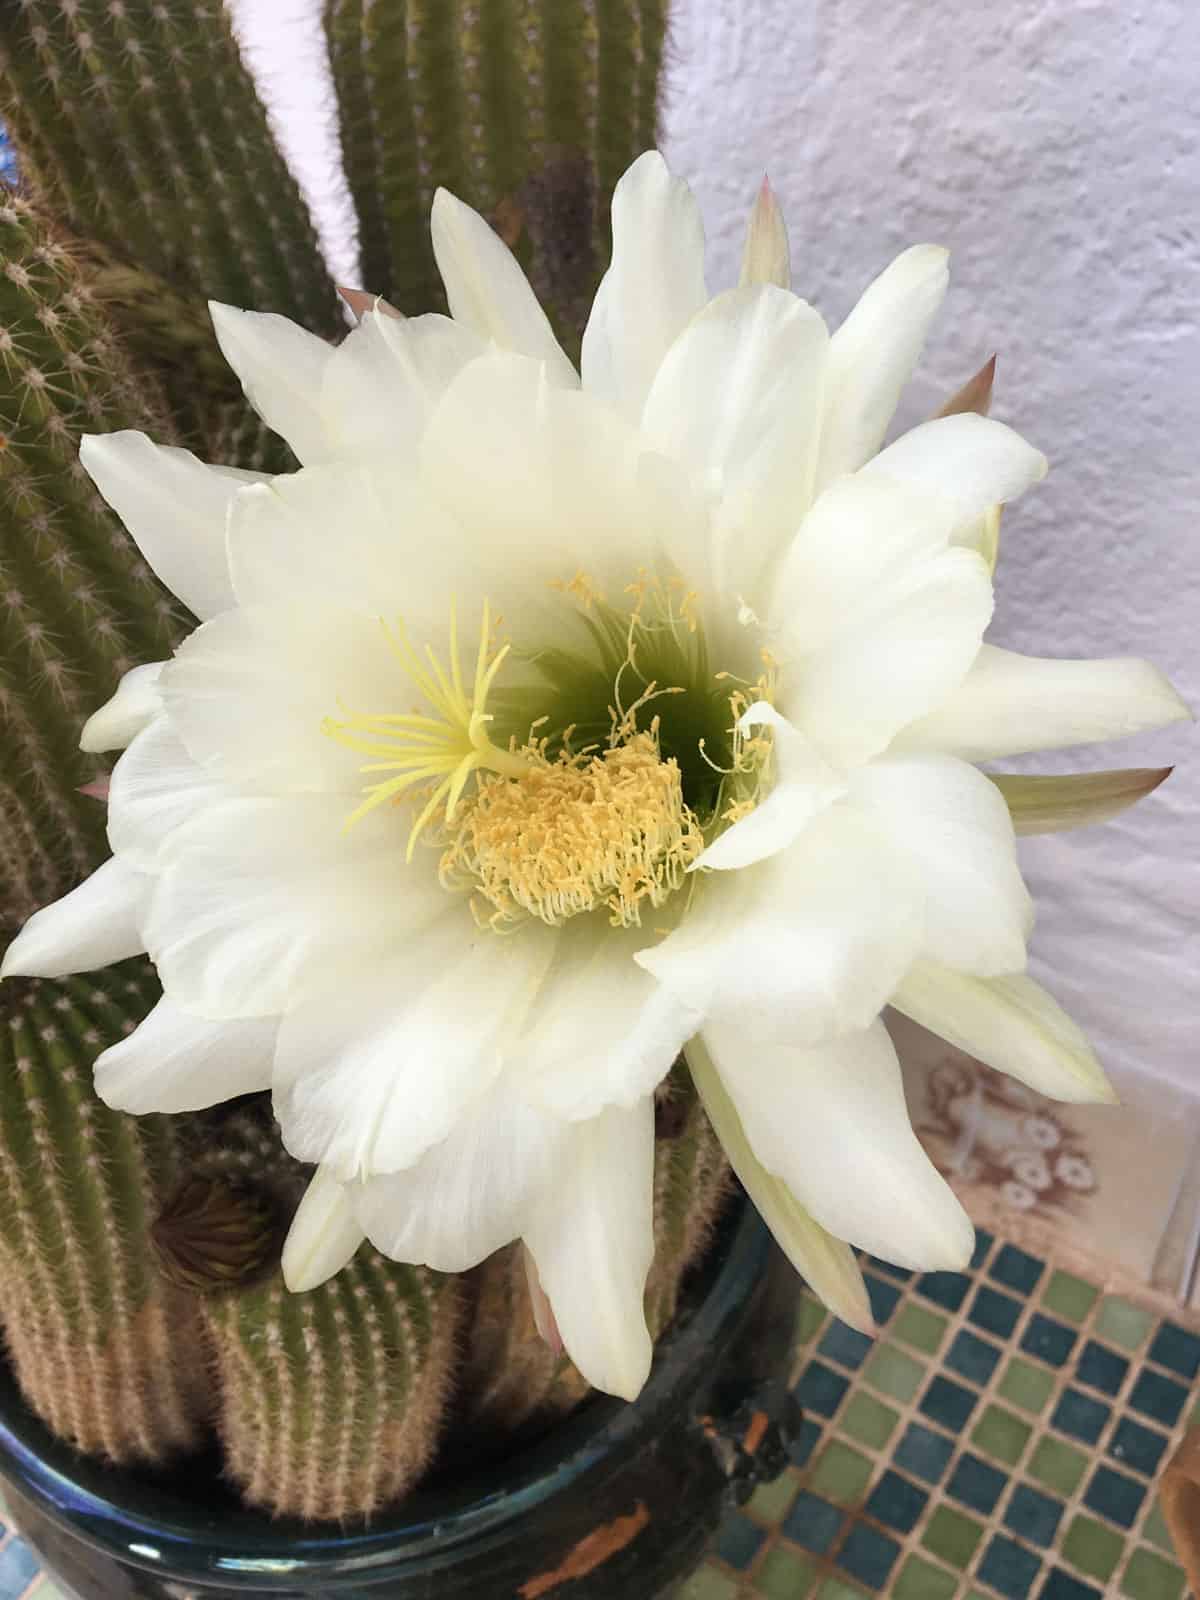 Gorgeous white petals of a White torch cactus